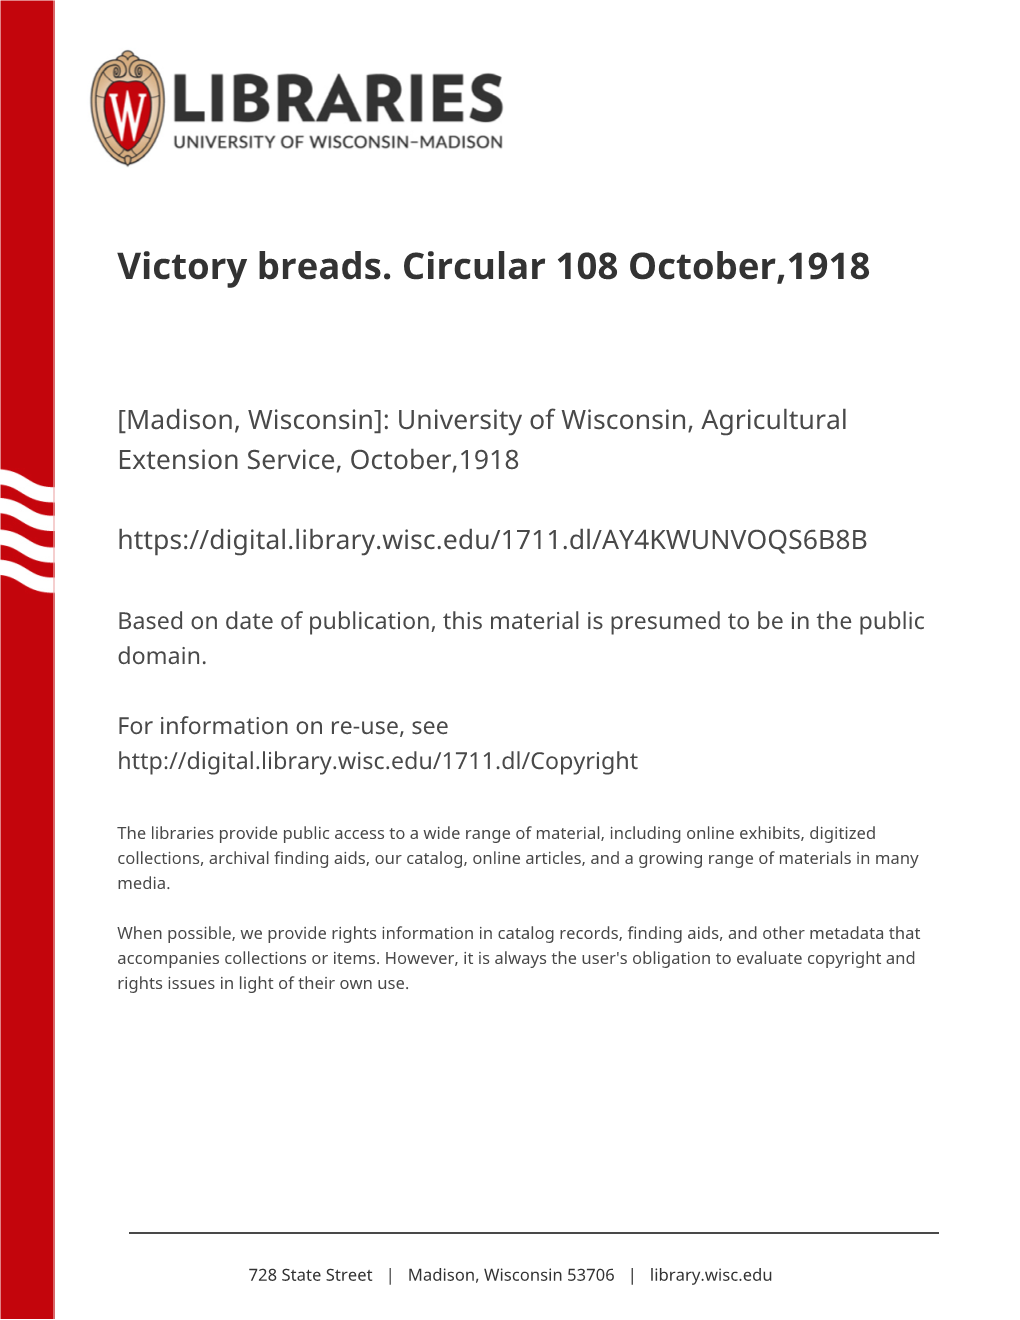 Victory Breads. Circular 108 October,1918